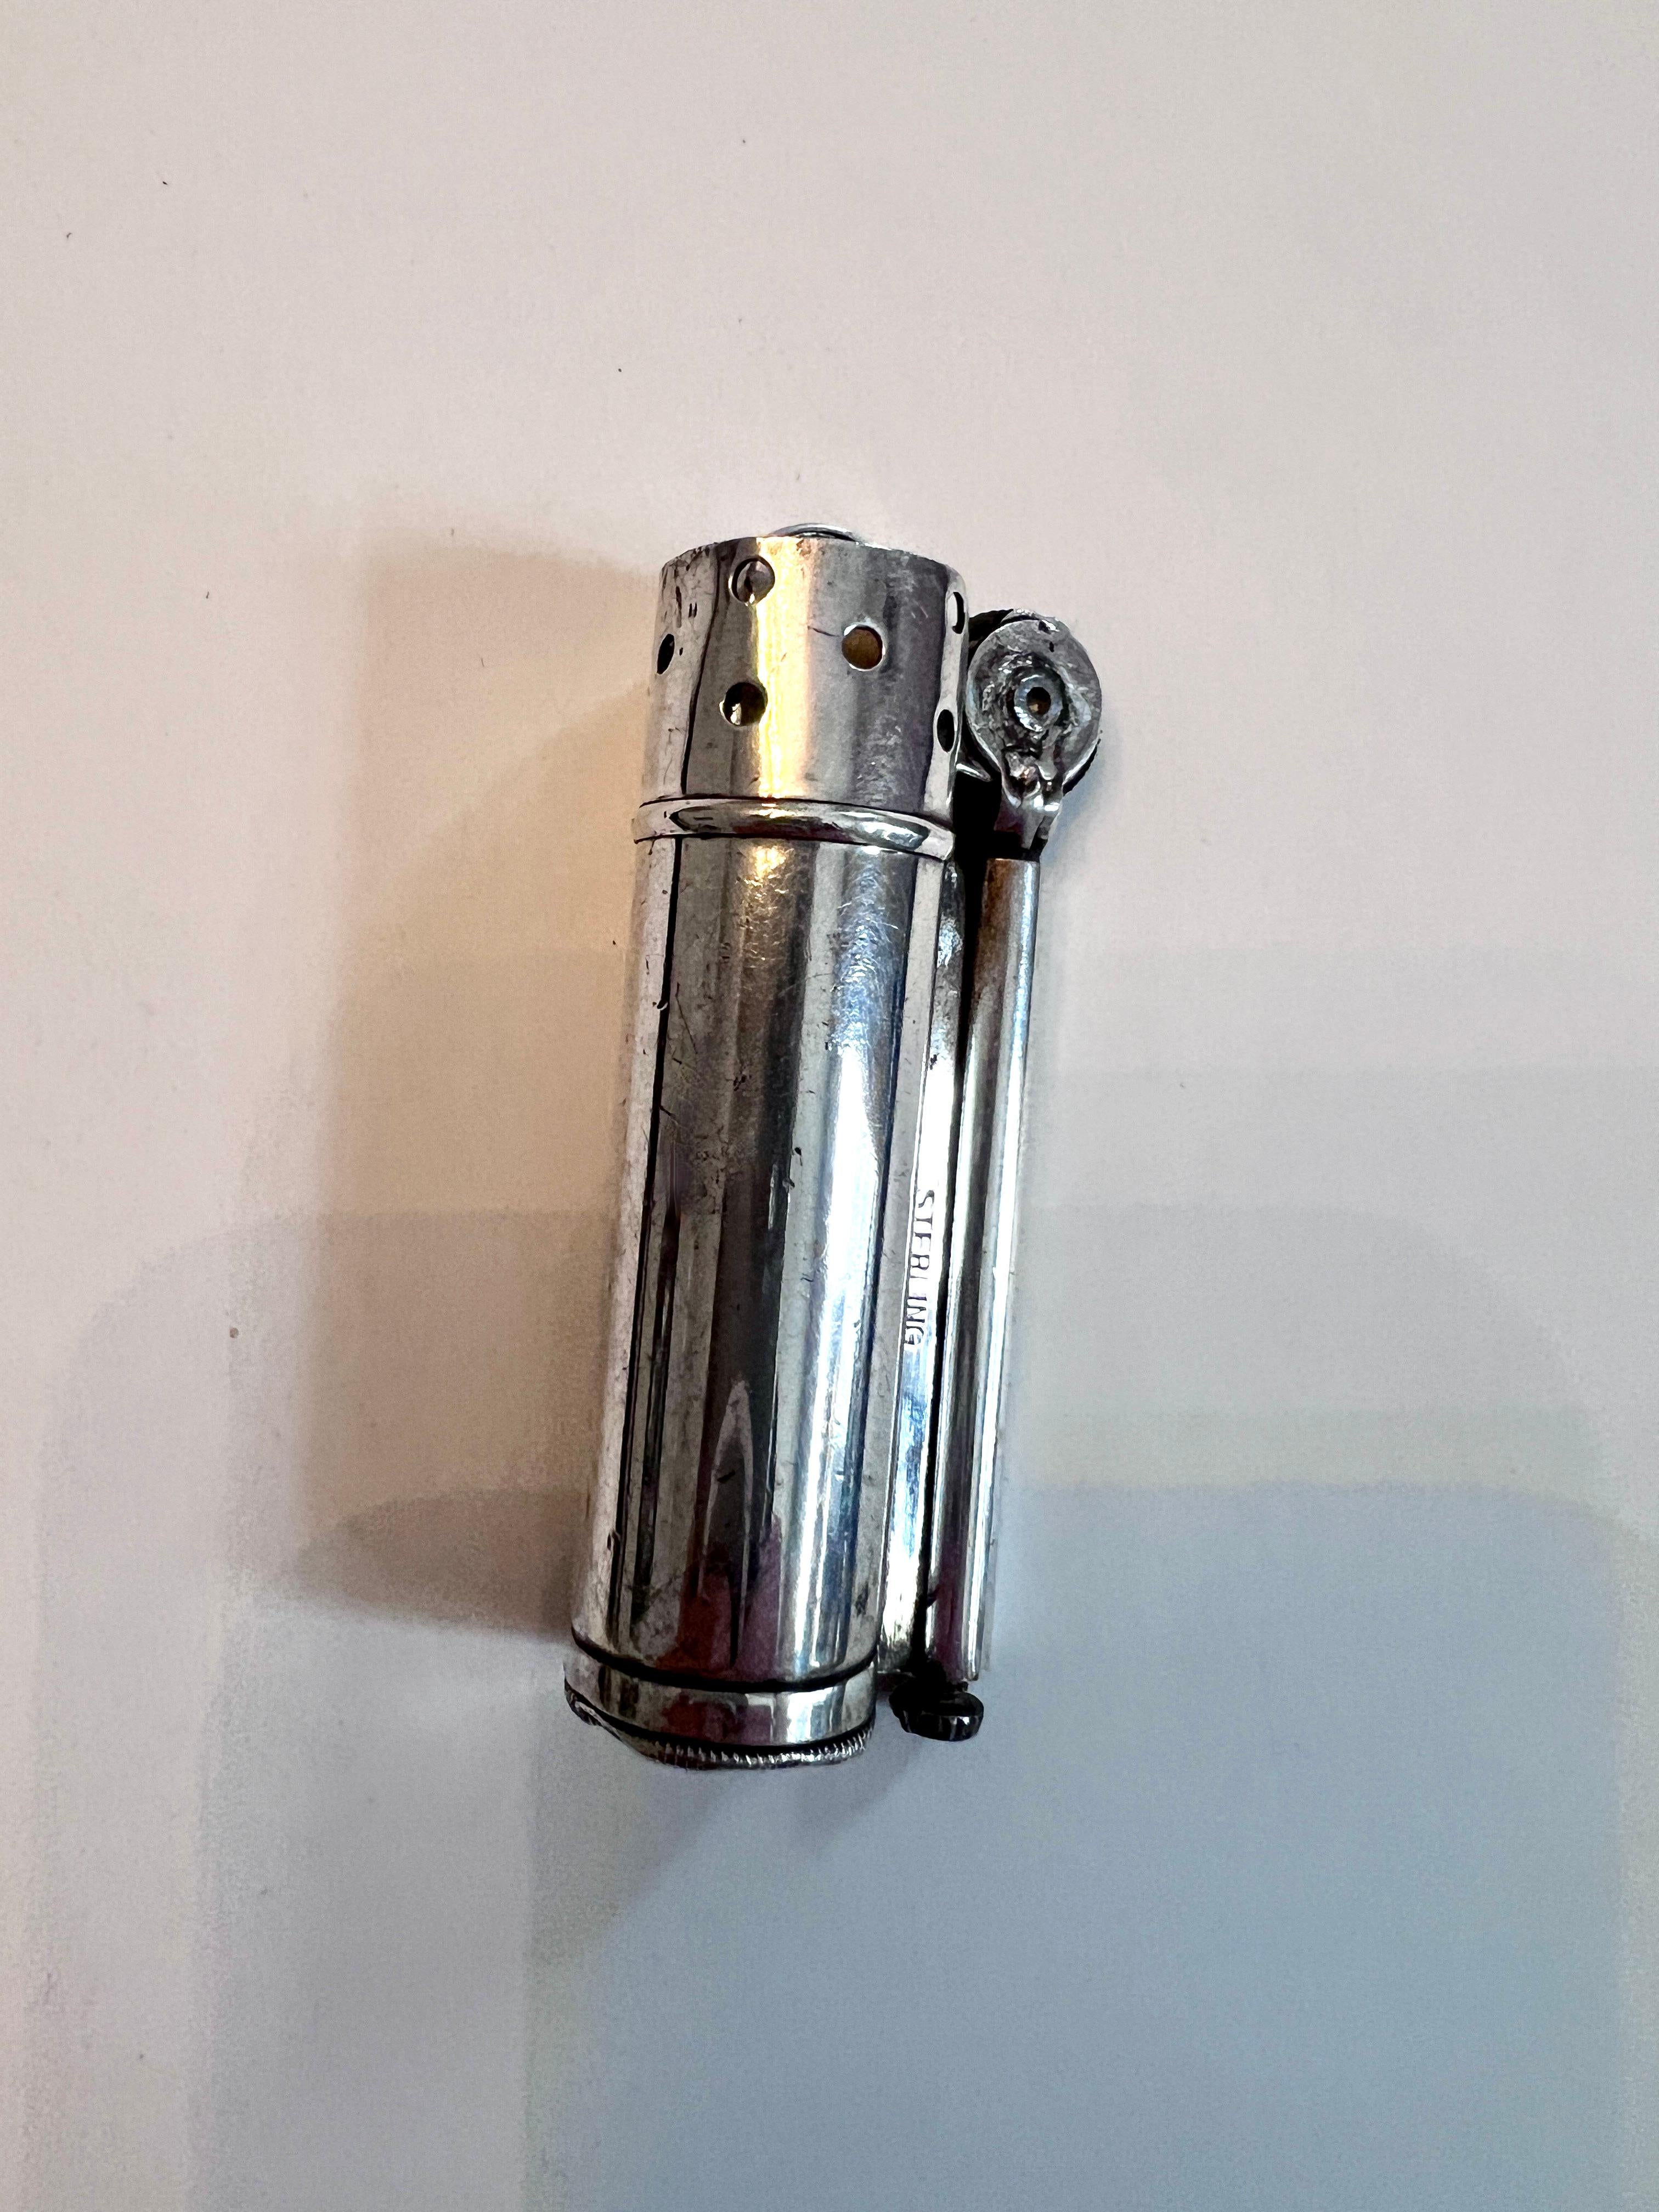 dunhill service lighter